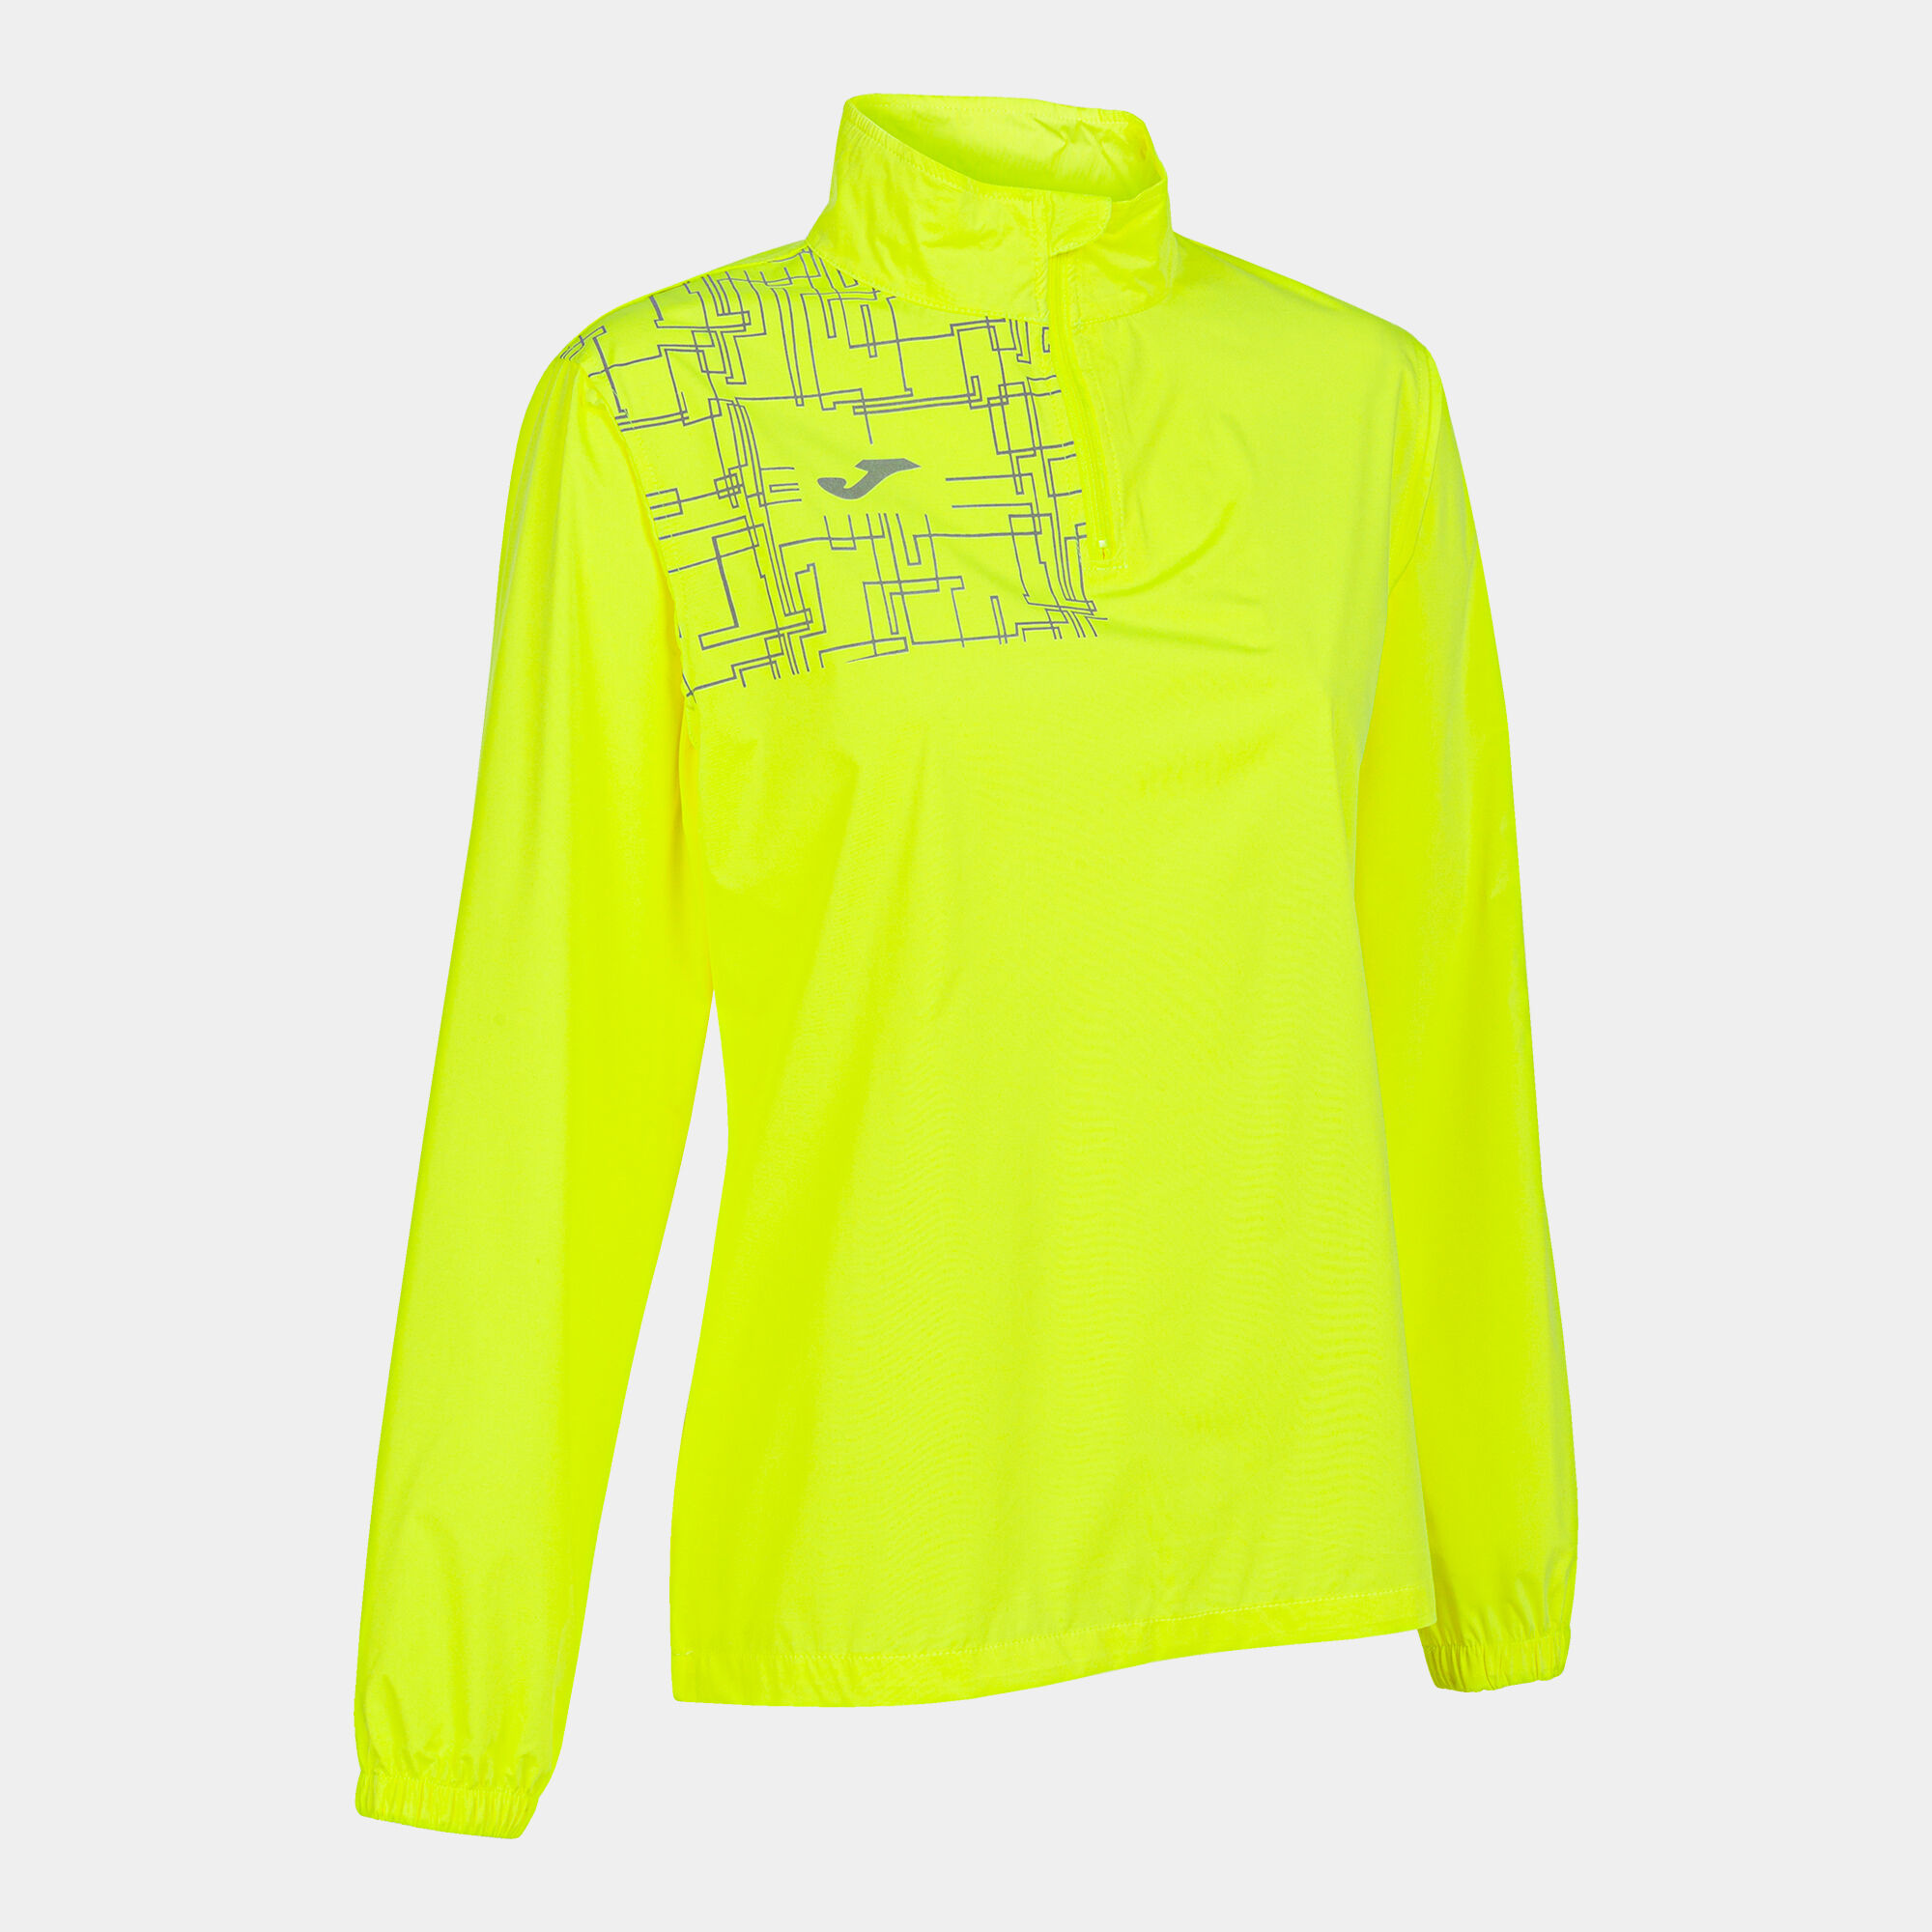 Sweatshirt woman Elite VIII fluorescent yellow